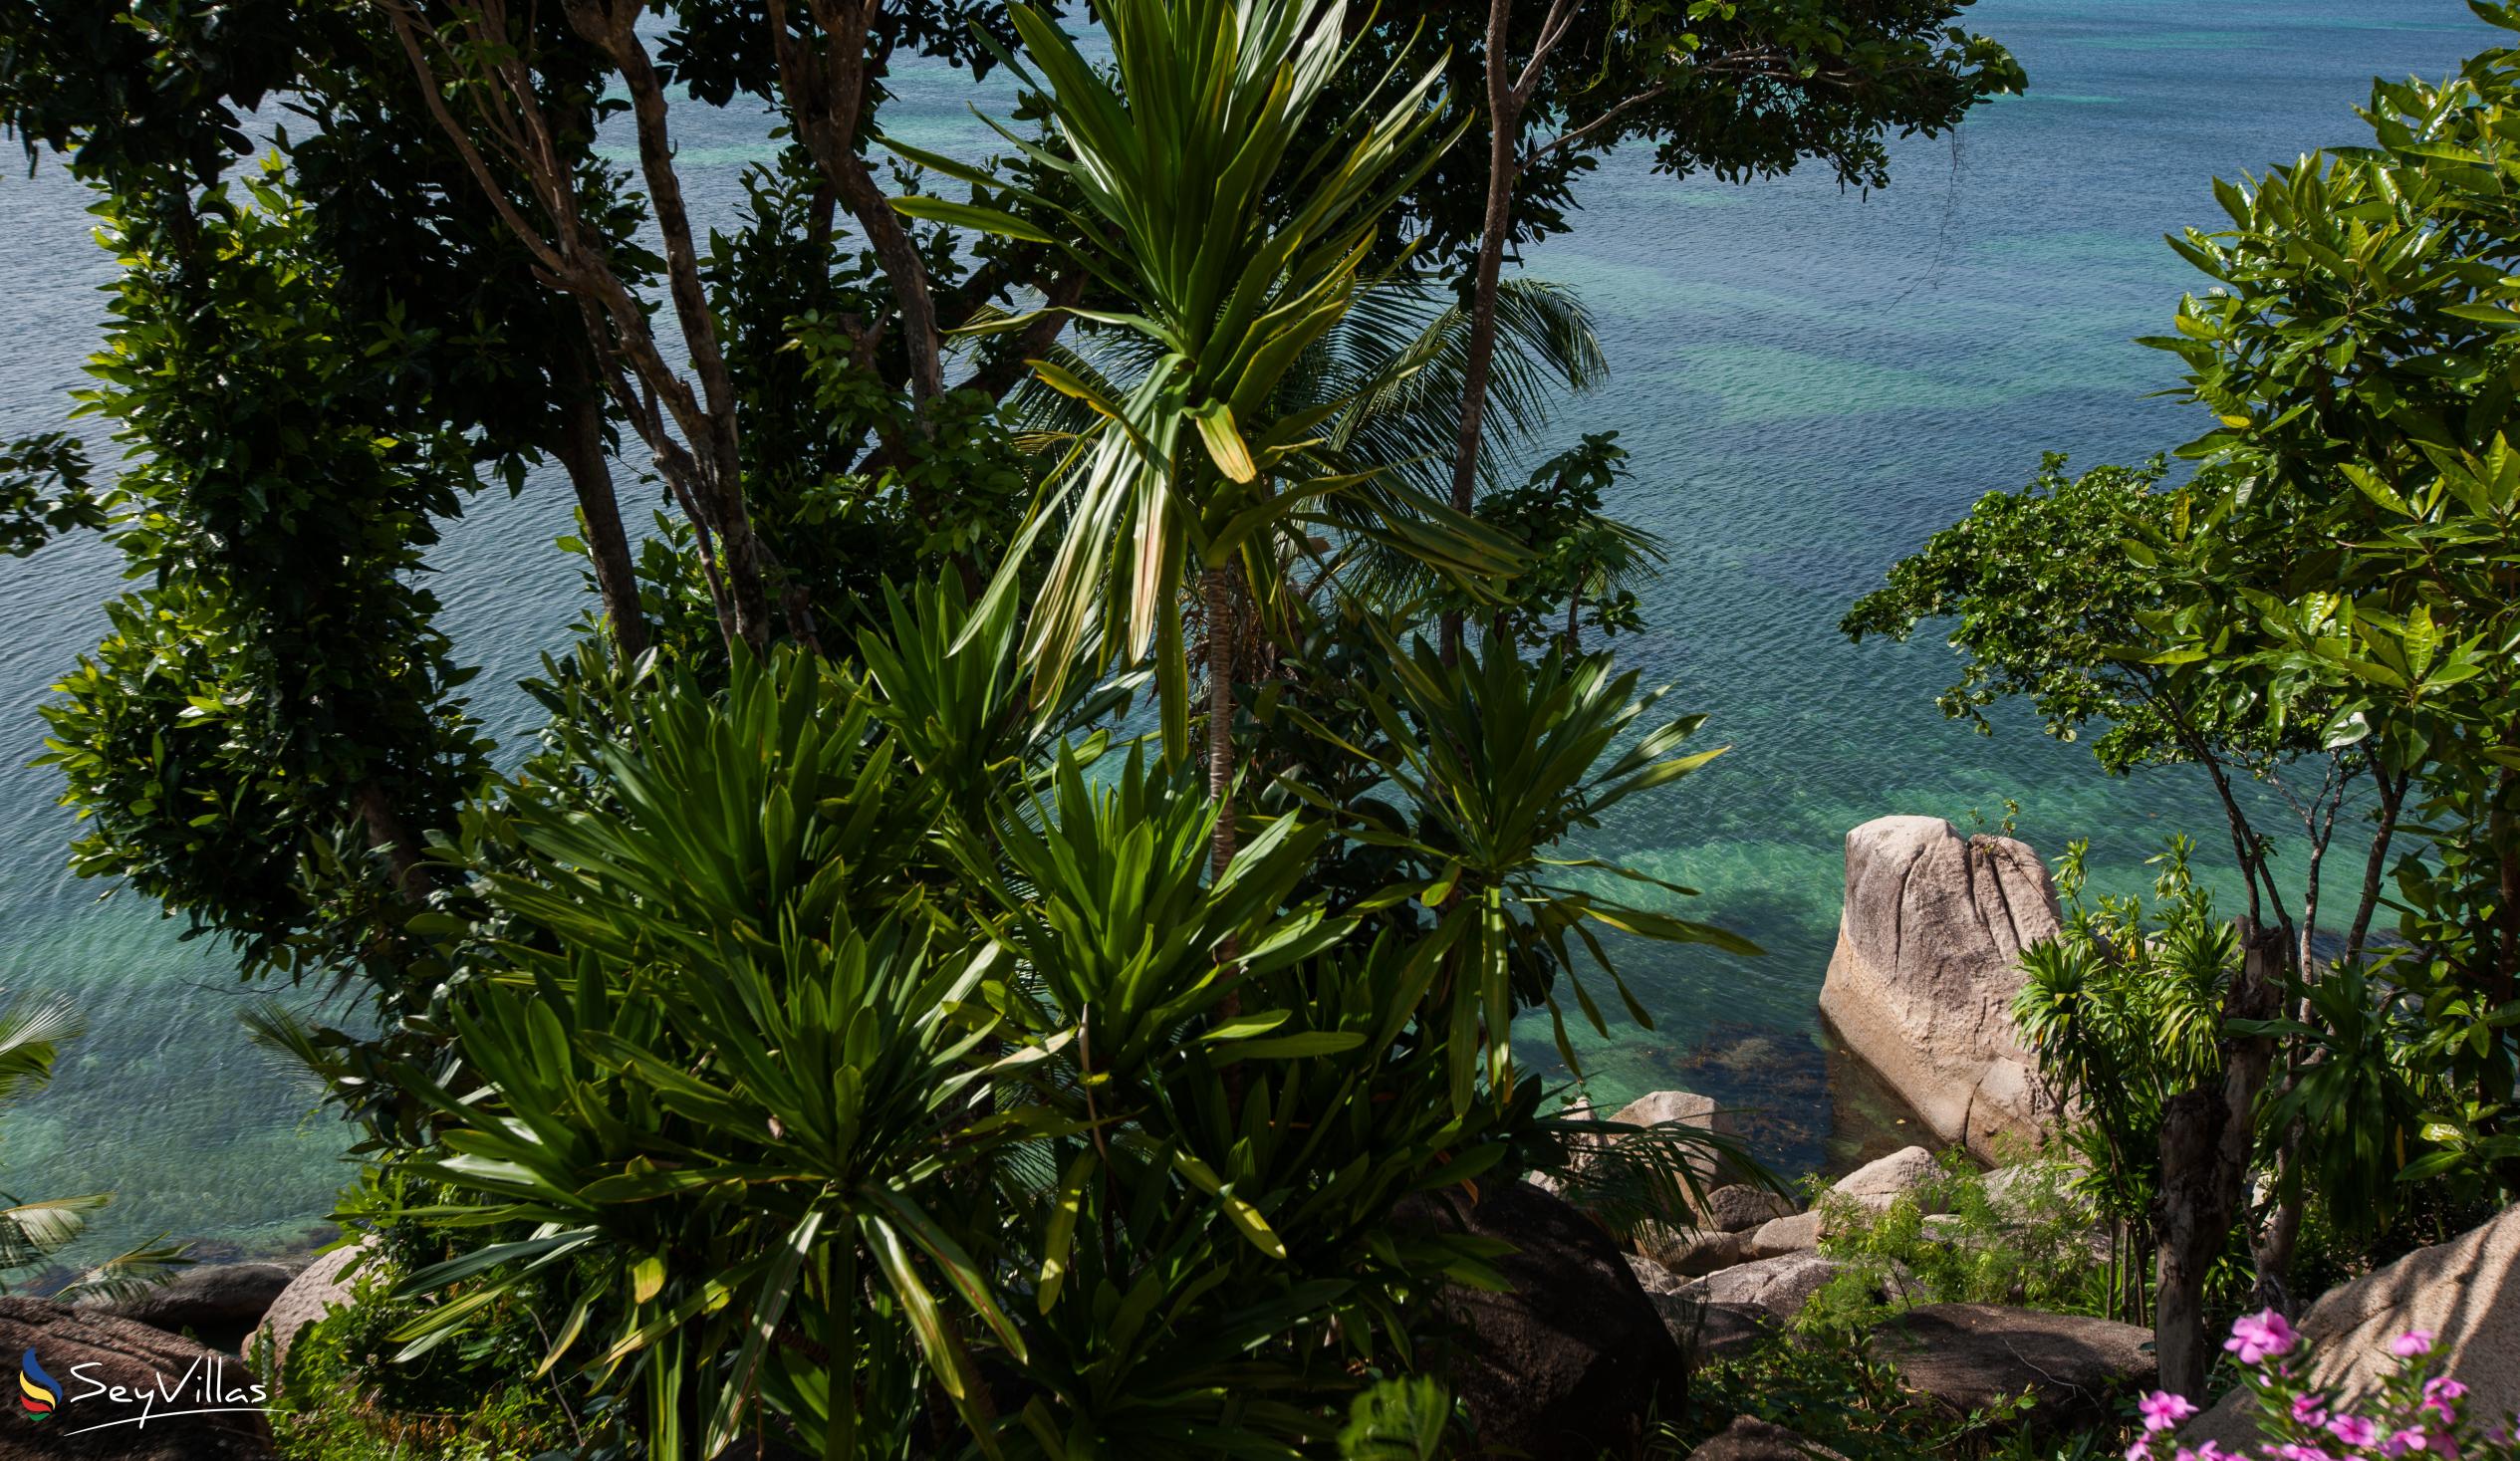 Photo 47: Coco de Mer & Black Parrot Suites - Location - Praslin (Seychelles)